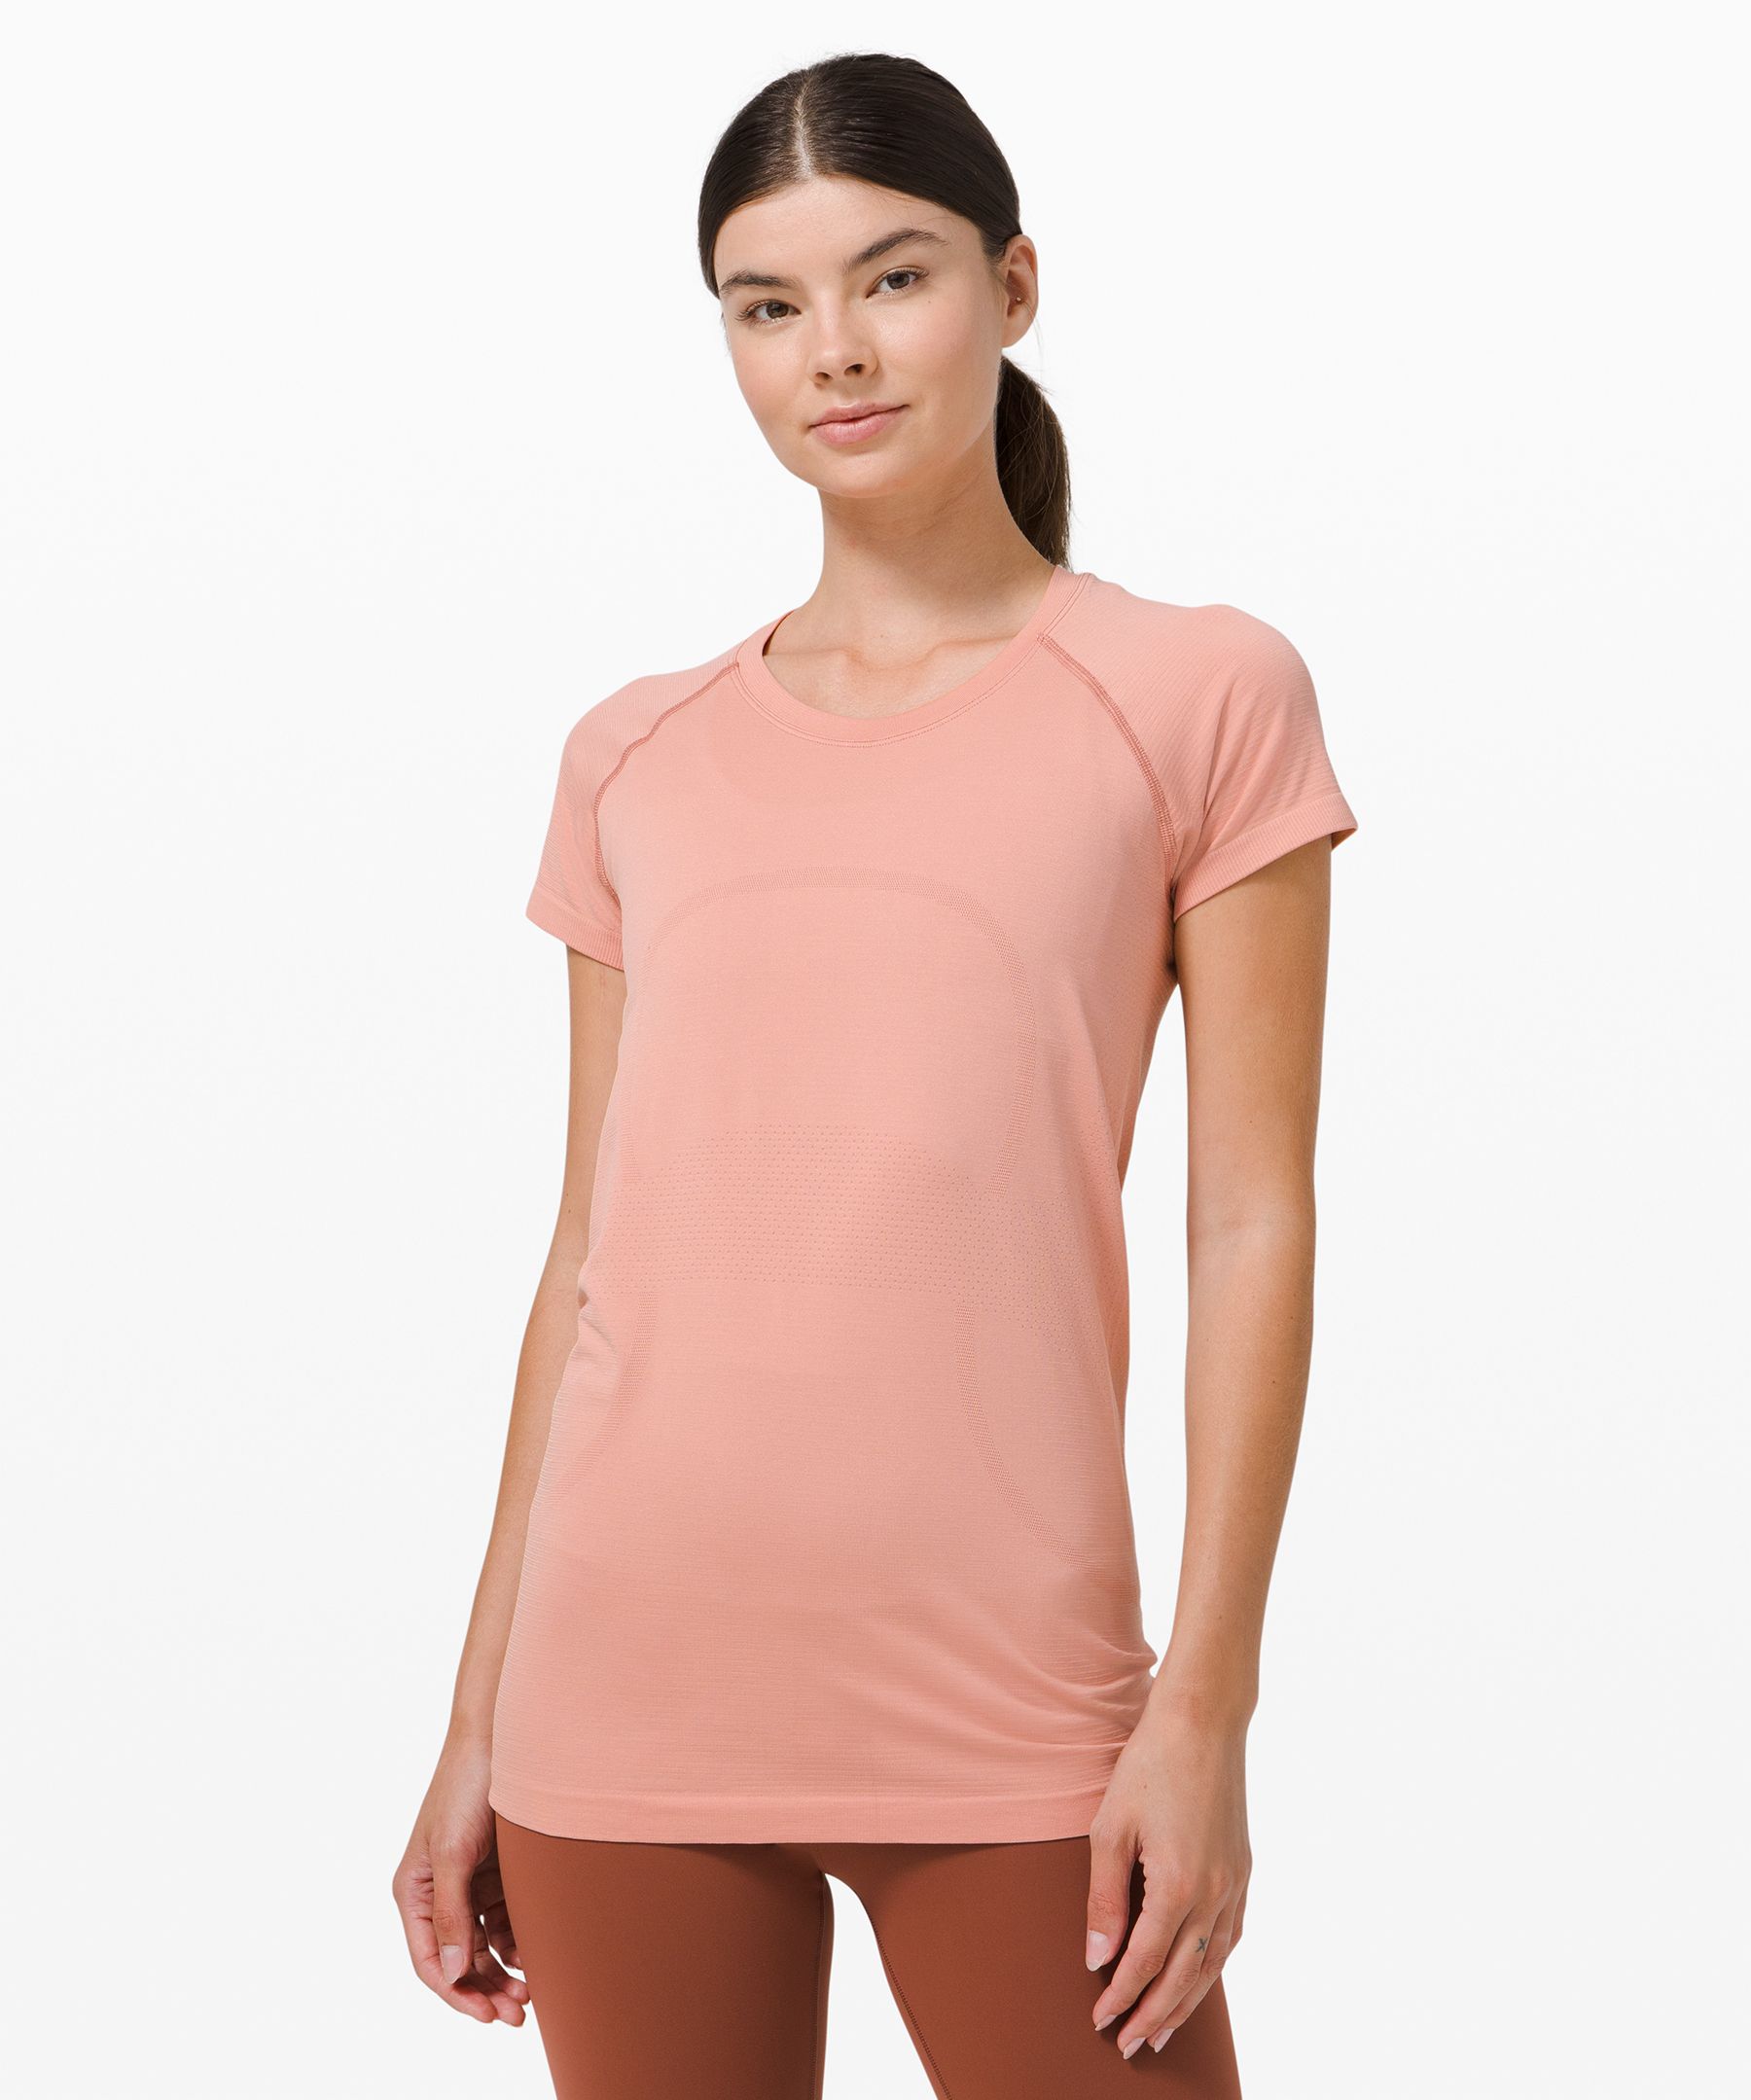 Lululemon Swiftly Tech Short Sleeve Shirt 2.0 In Pink Pastel